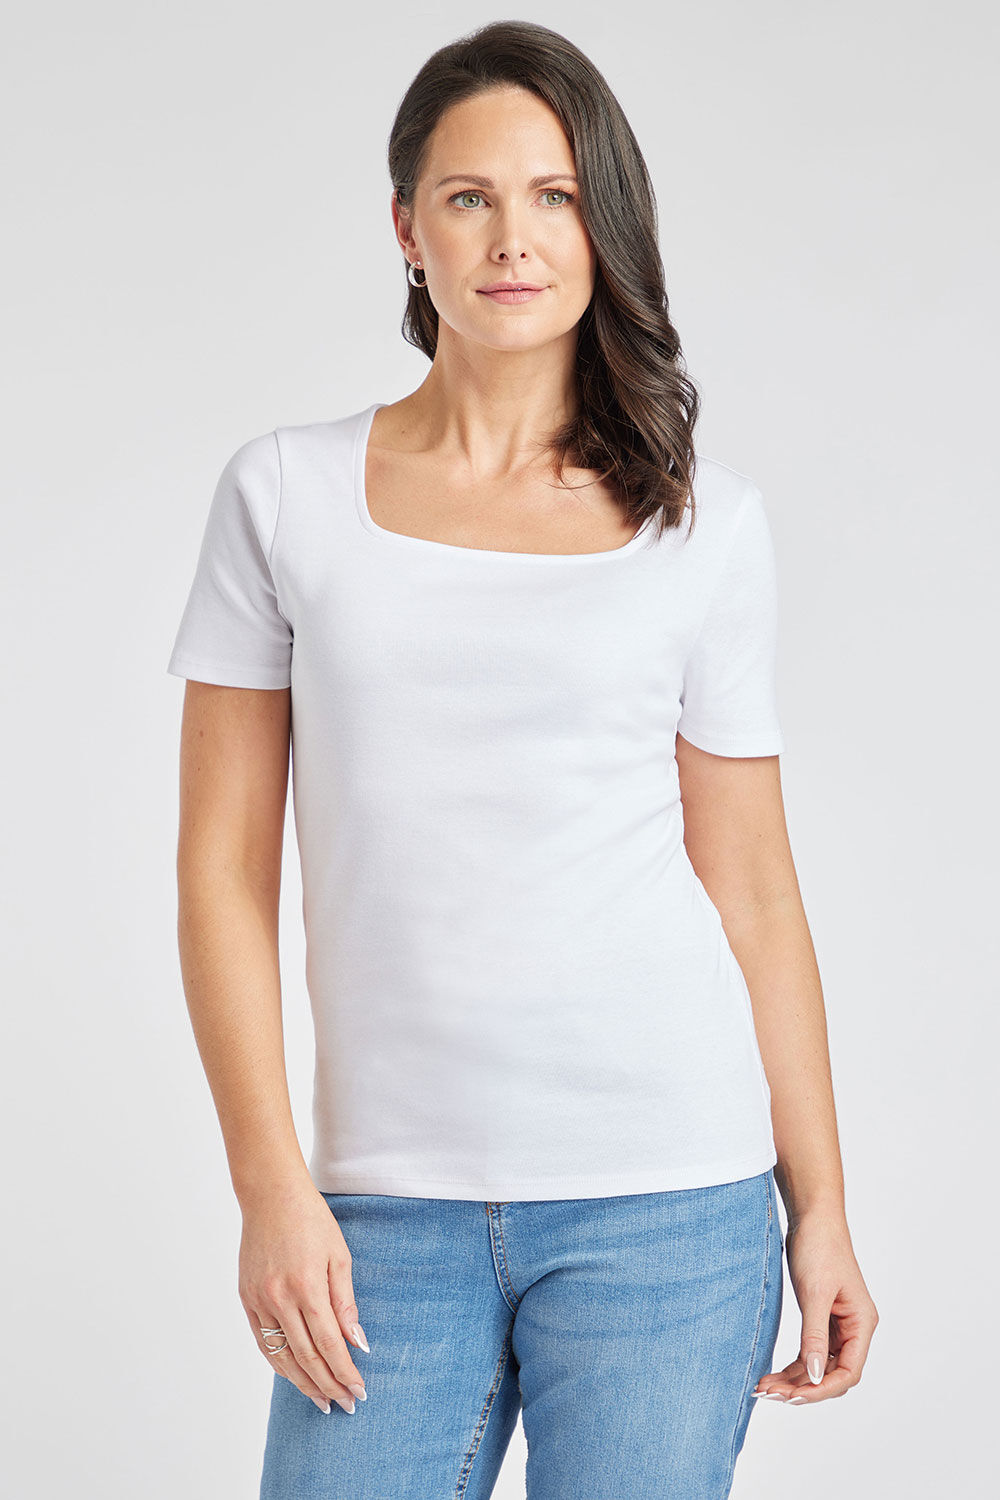 Bonmarche White Square Neck Plain T-Shirt, Size: 12